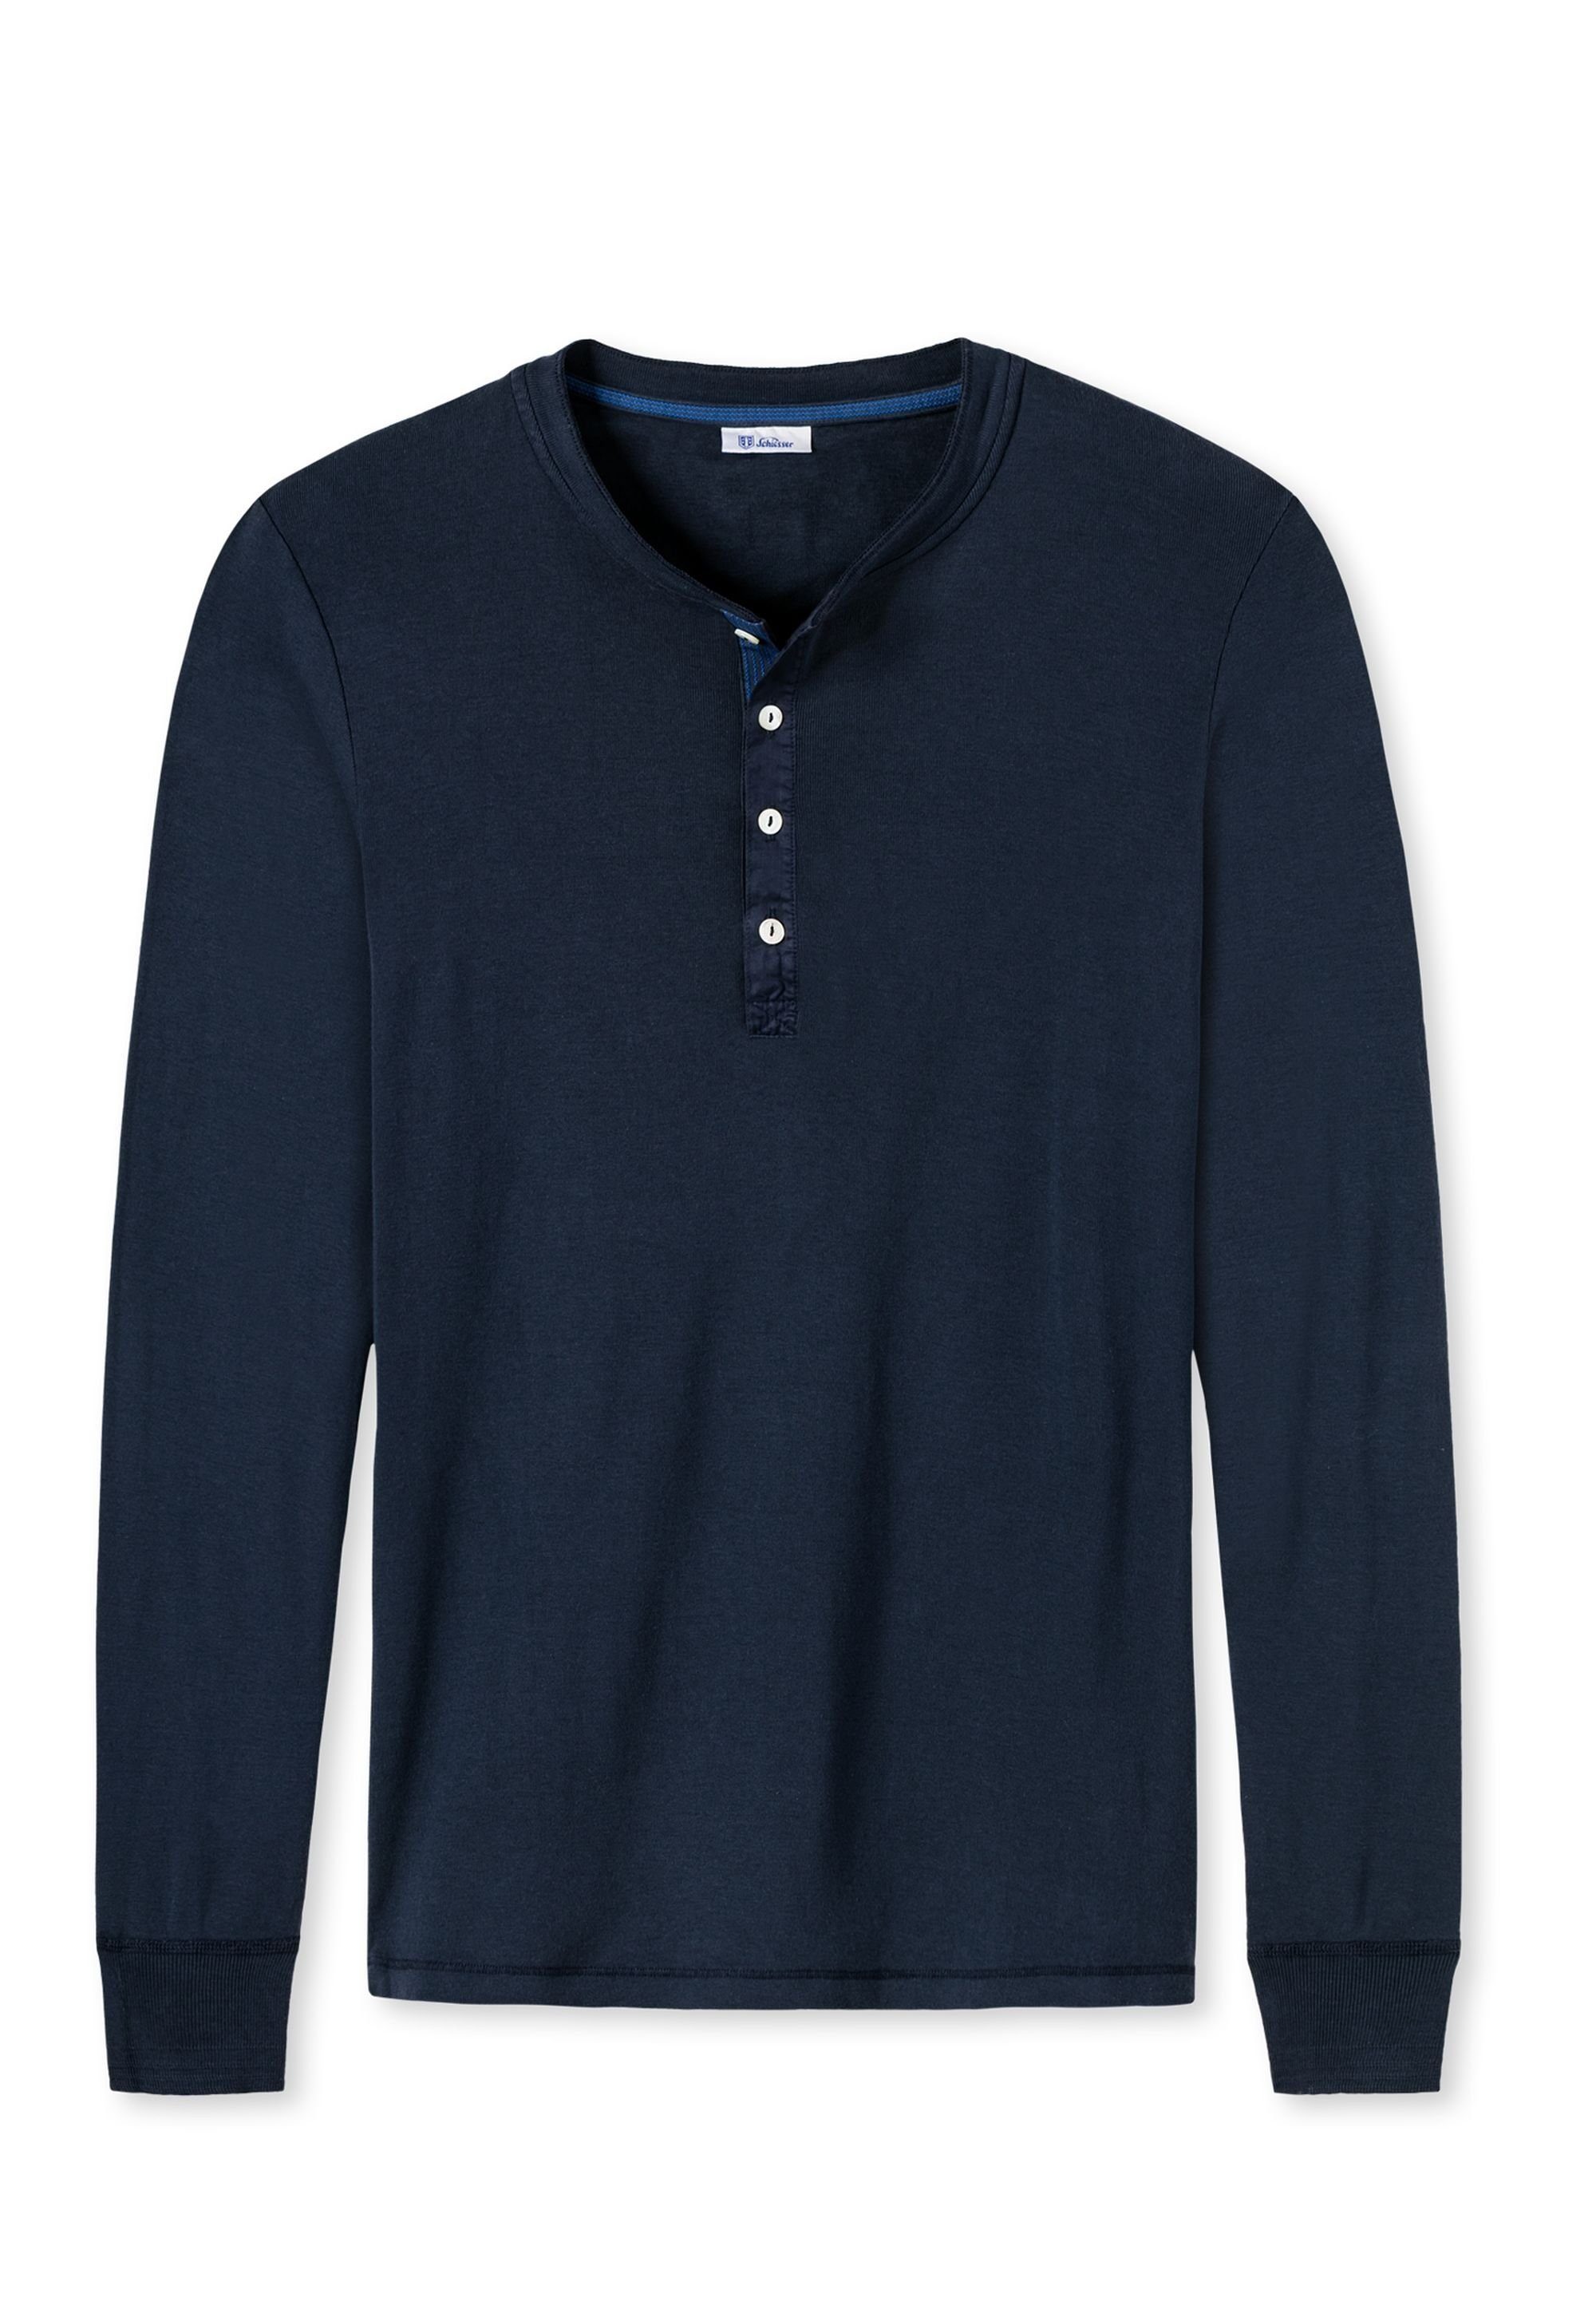 Karl - Langarm, Heinz SCHIESSER Unterhemd, Blau REVIVAL Shirt T-Shirt Herren